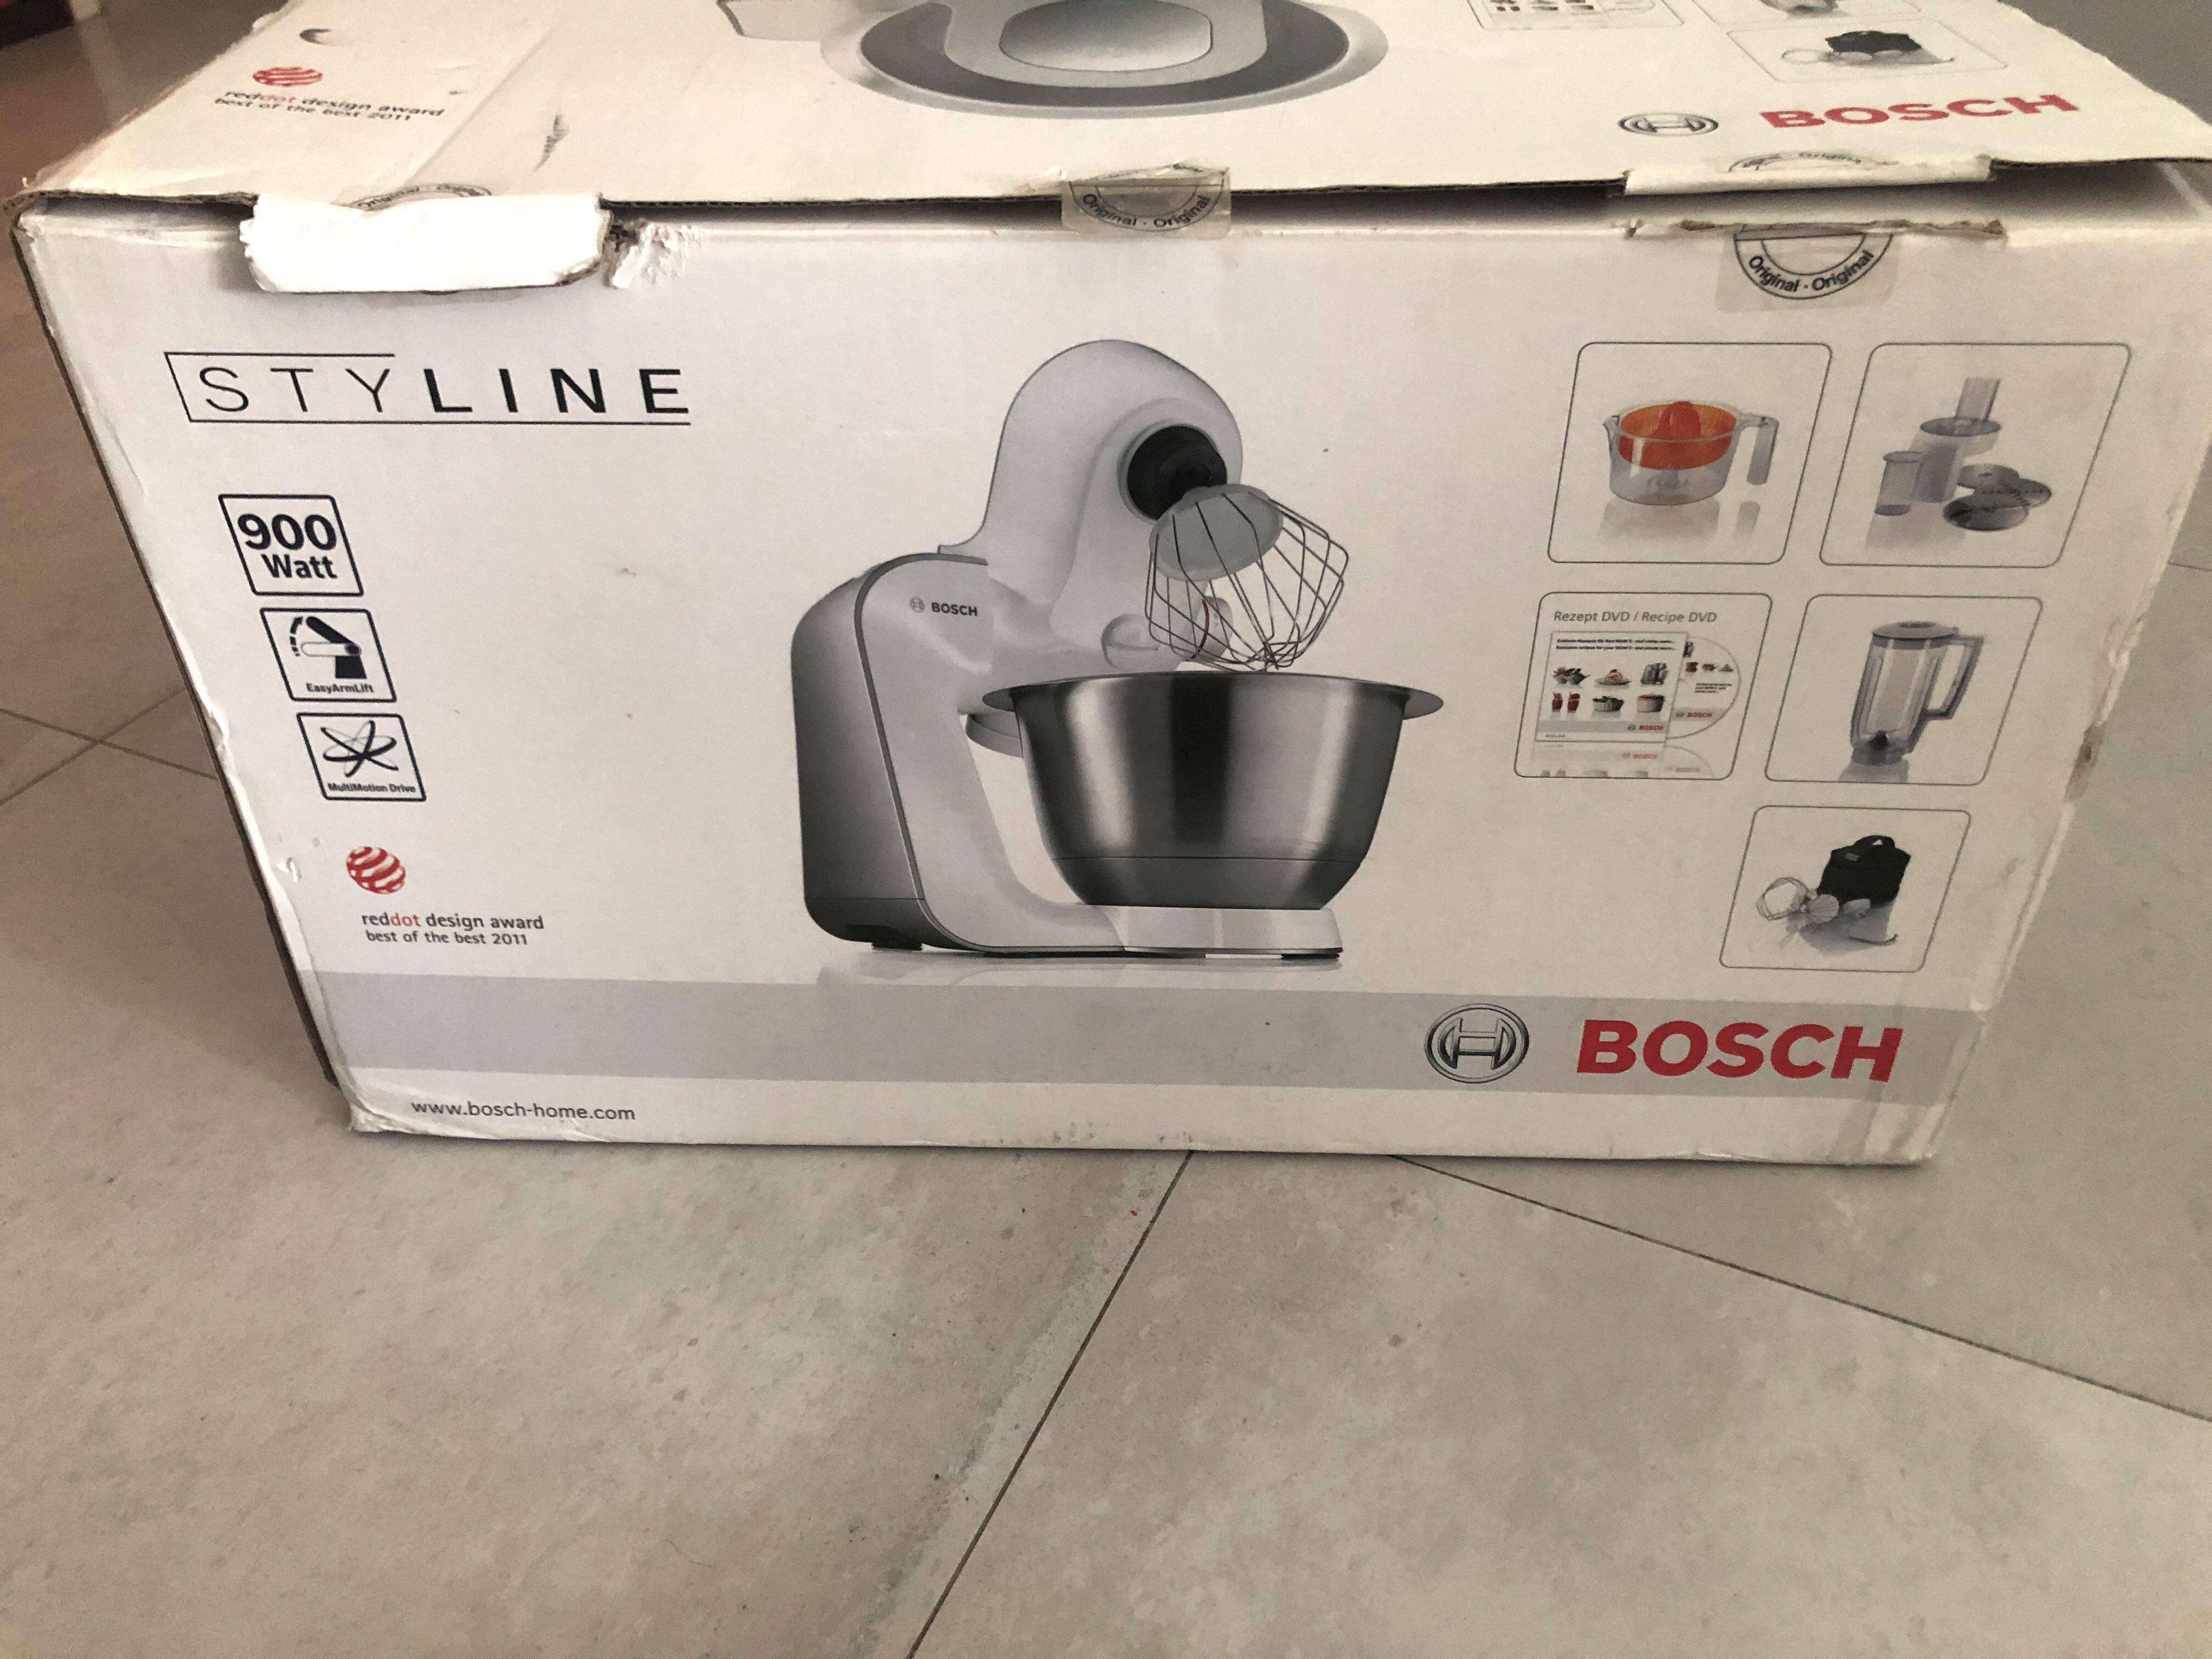 Bosch Kitchen MUM54230, TV & Home Kitchen Appliances, Hand & Stand Mixers on Carousell